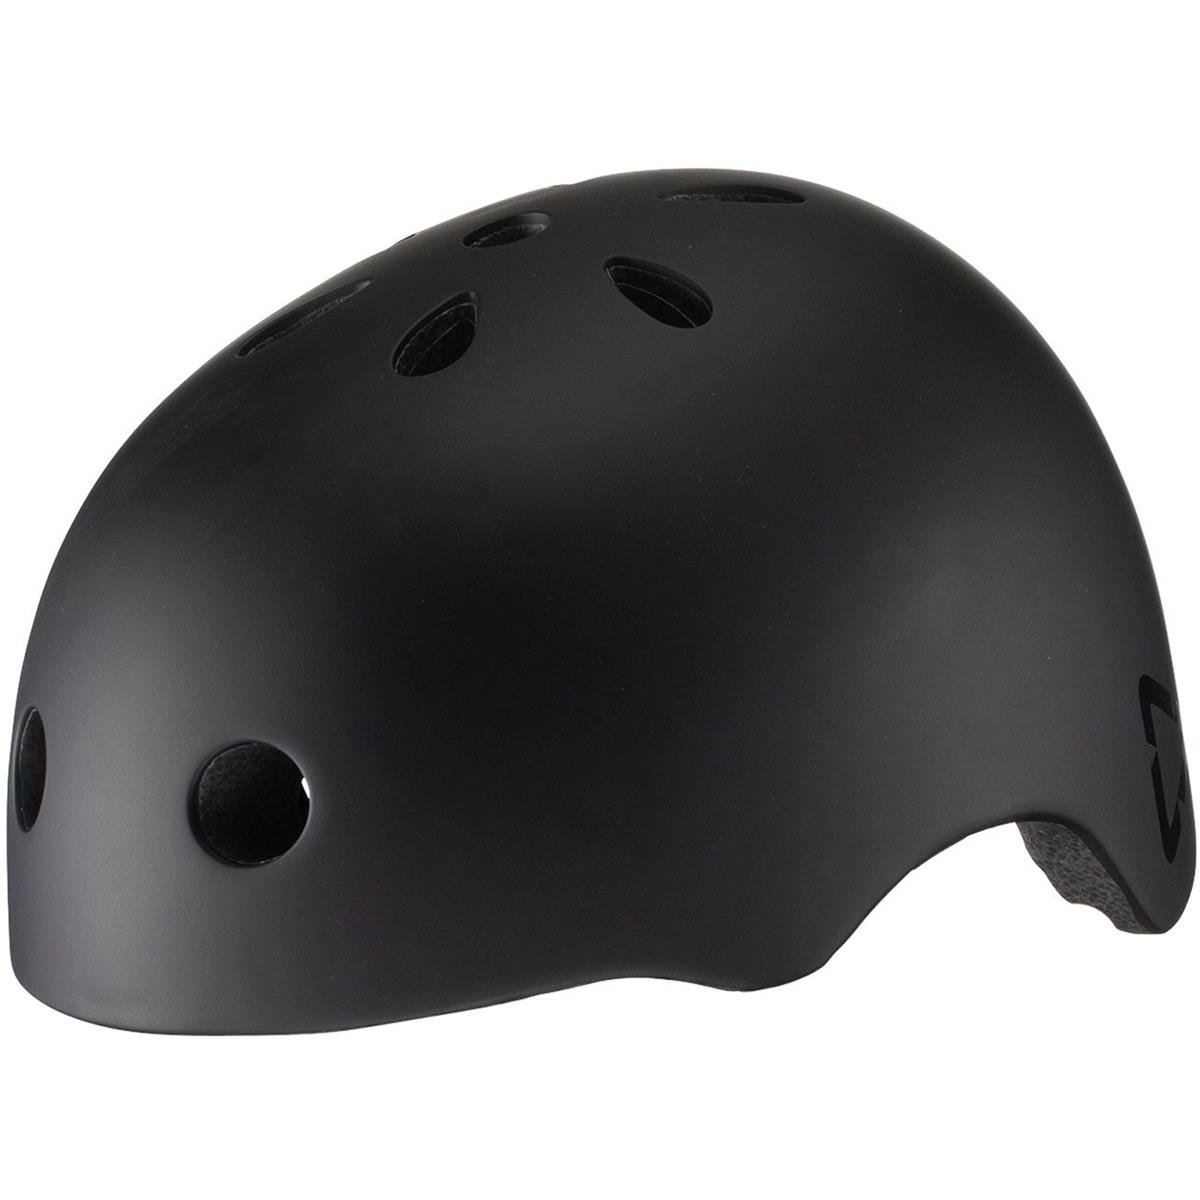 Leatt BMX/Dirt Helmet 1.0 Urban Black